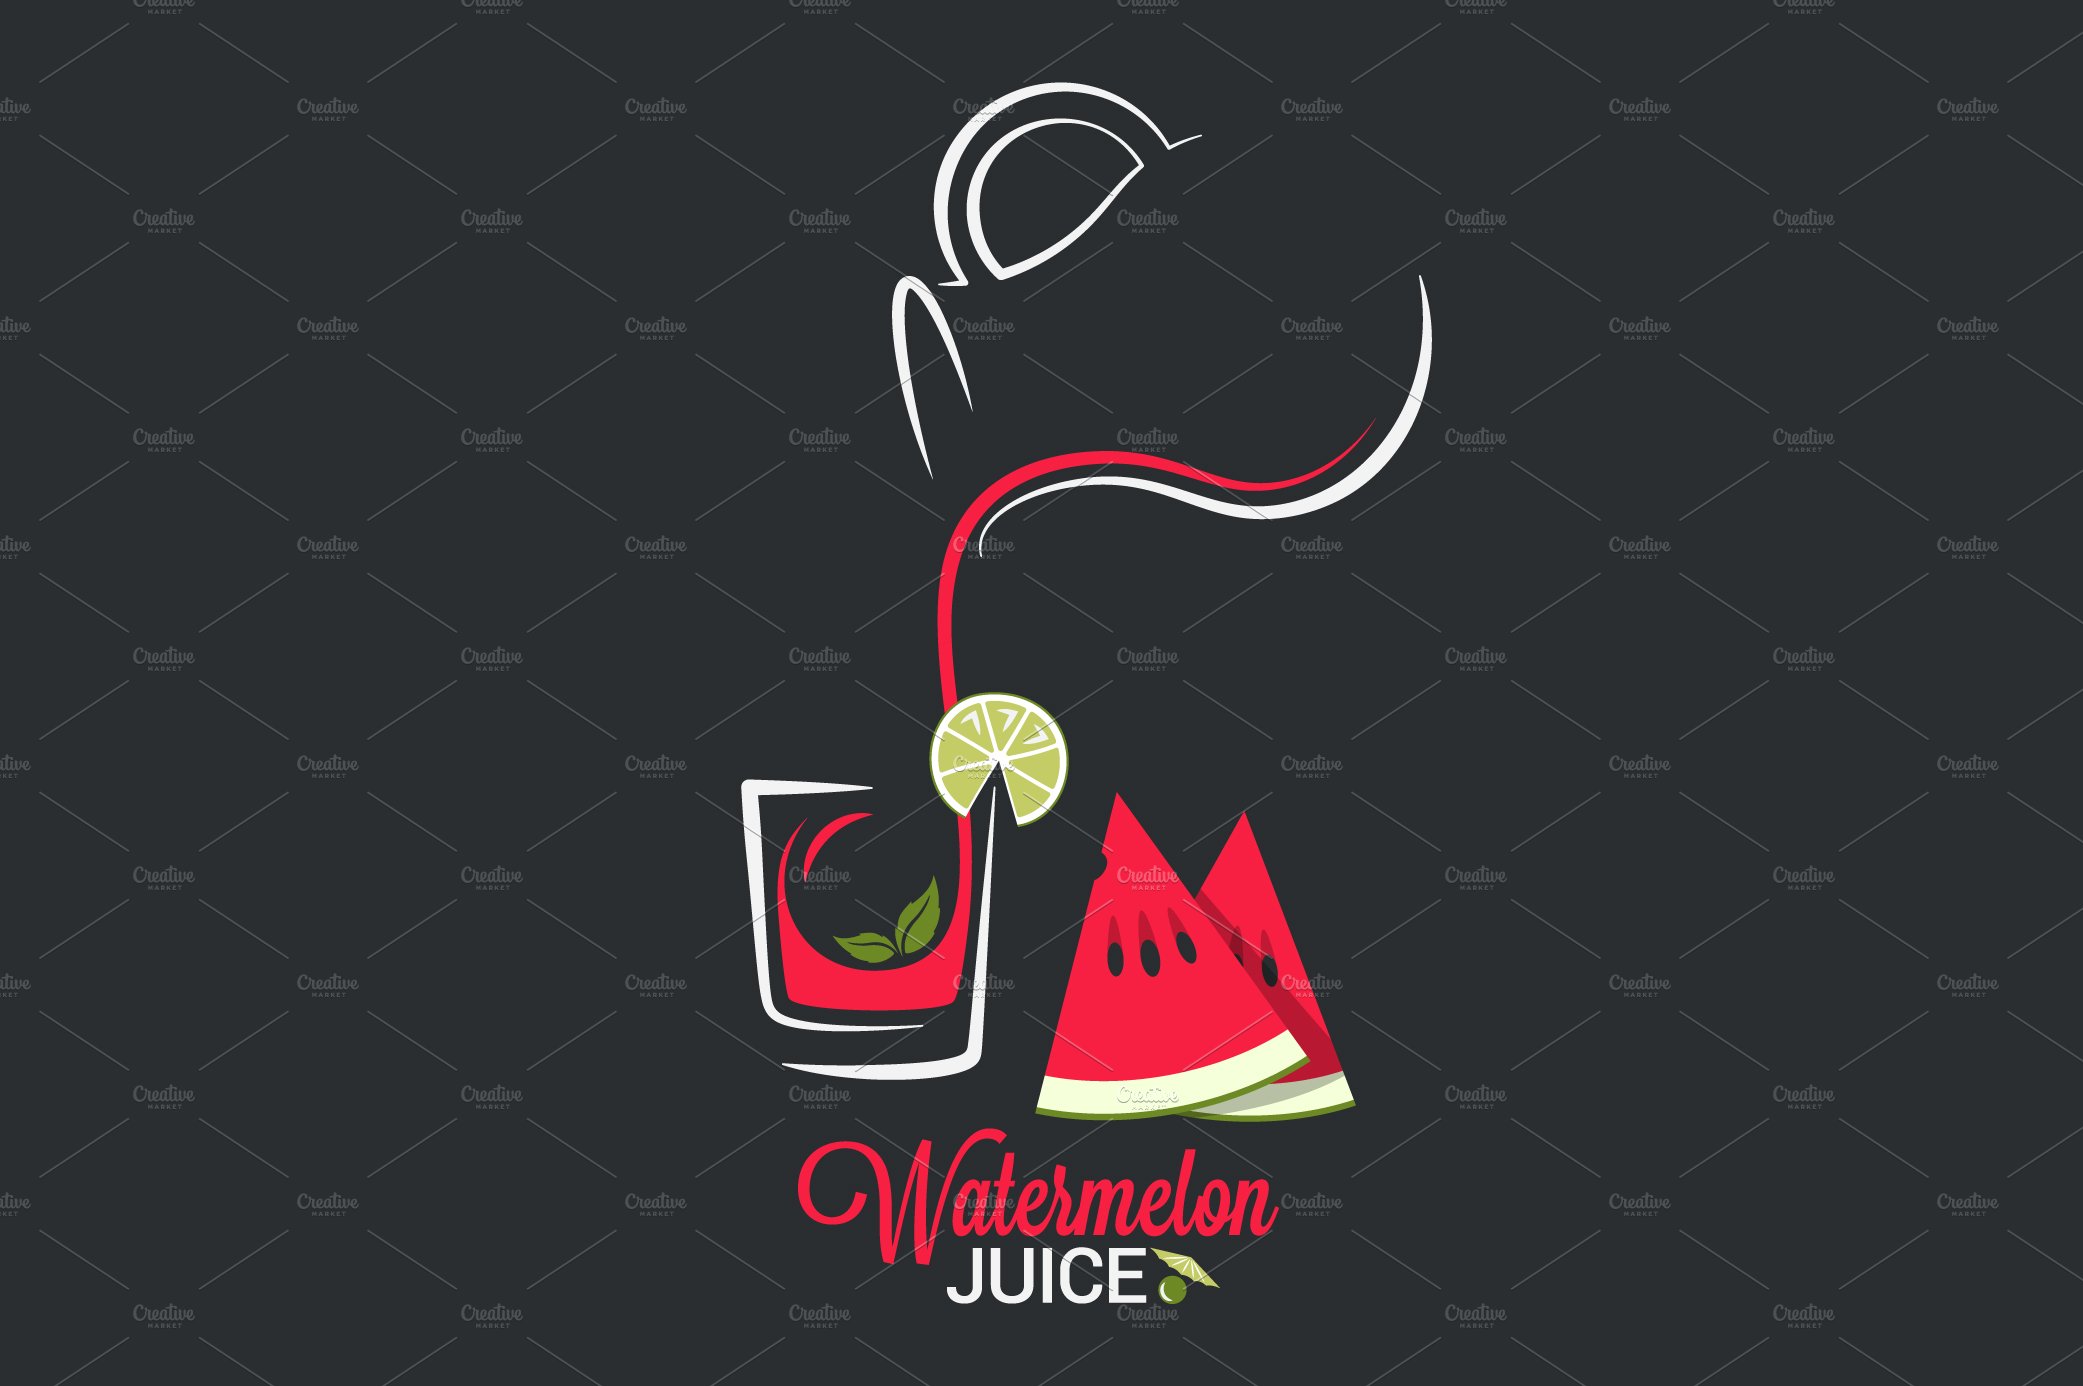 Watermelon juice. cover image.